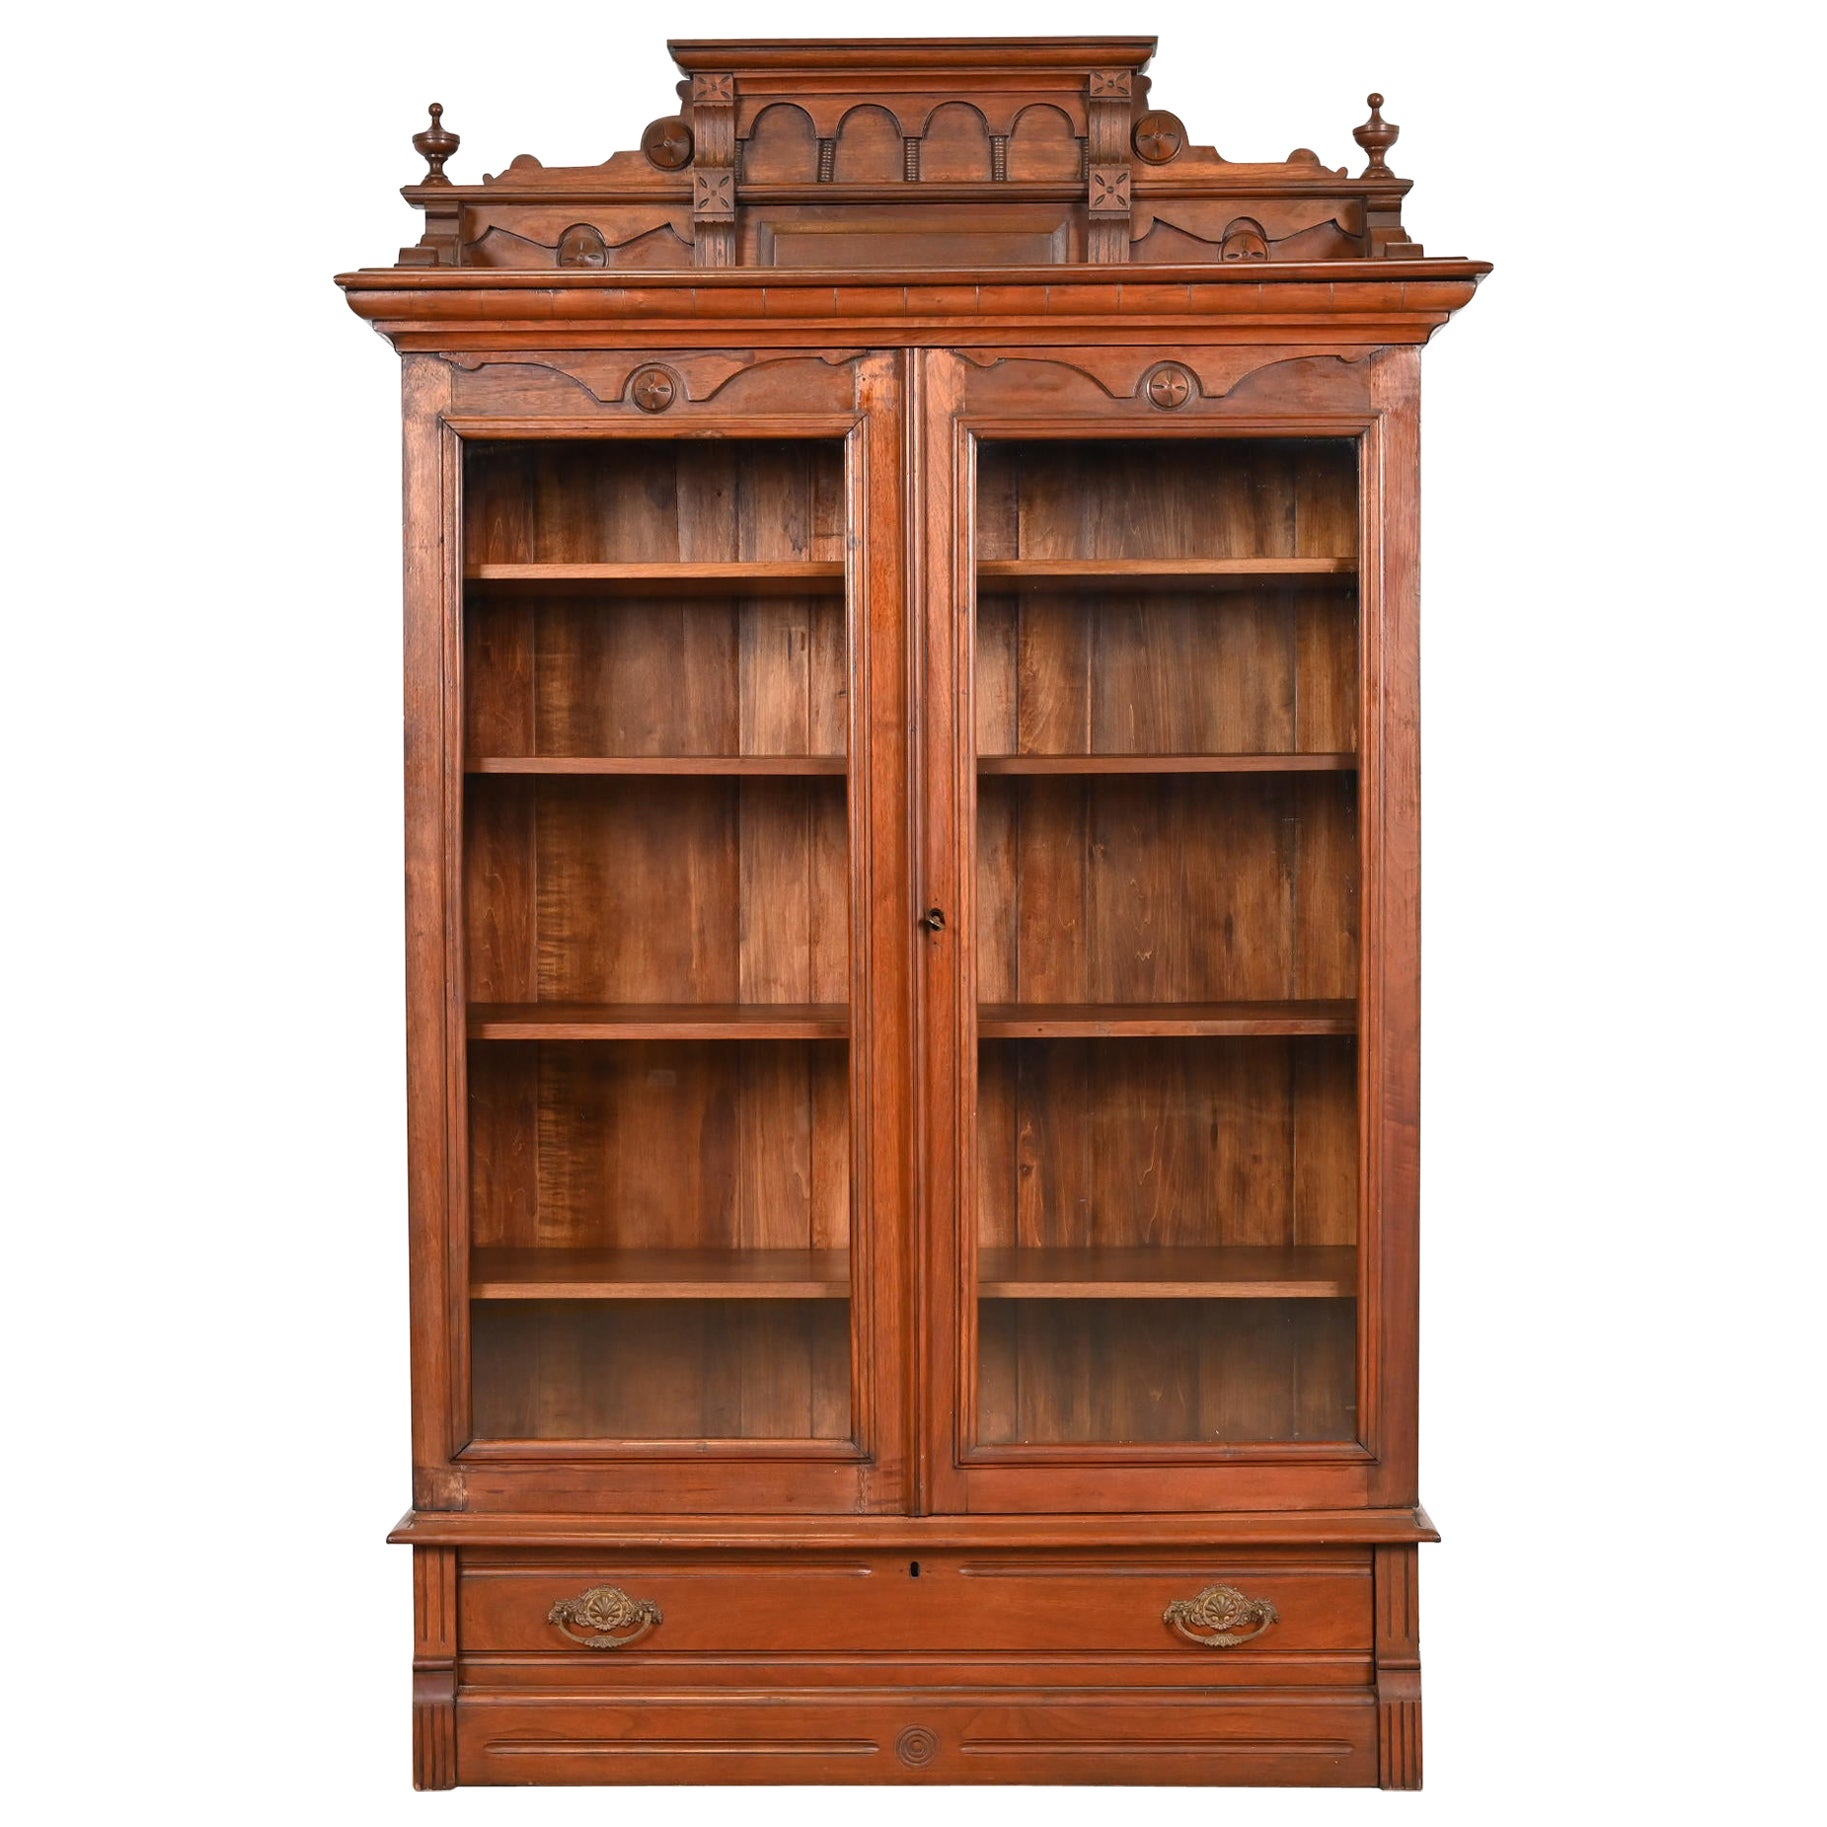 Antique Eastlake Victorian Carved Walnut Bookcase, circa 1860s